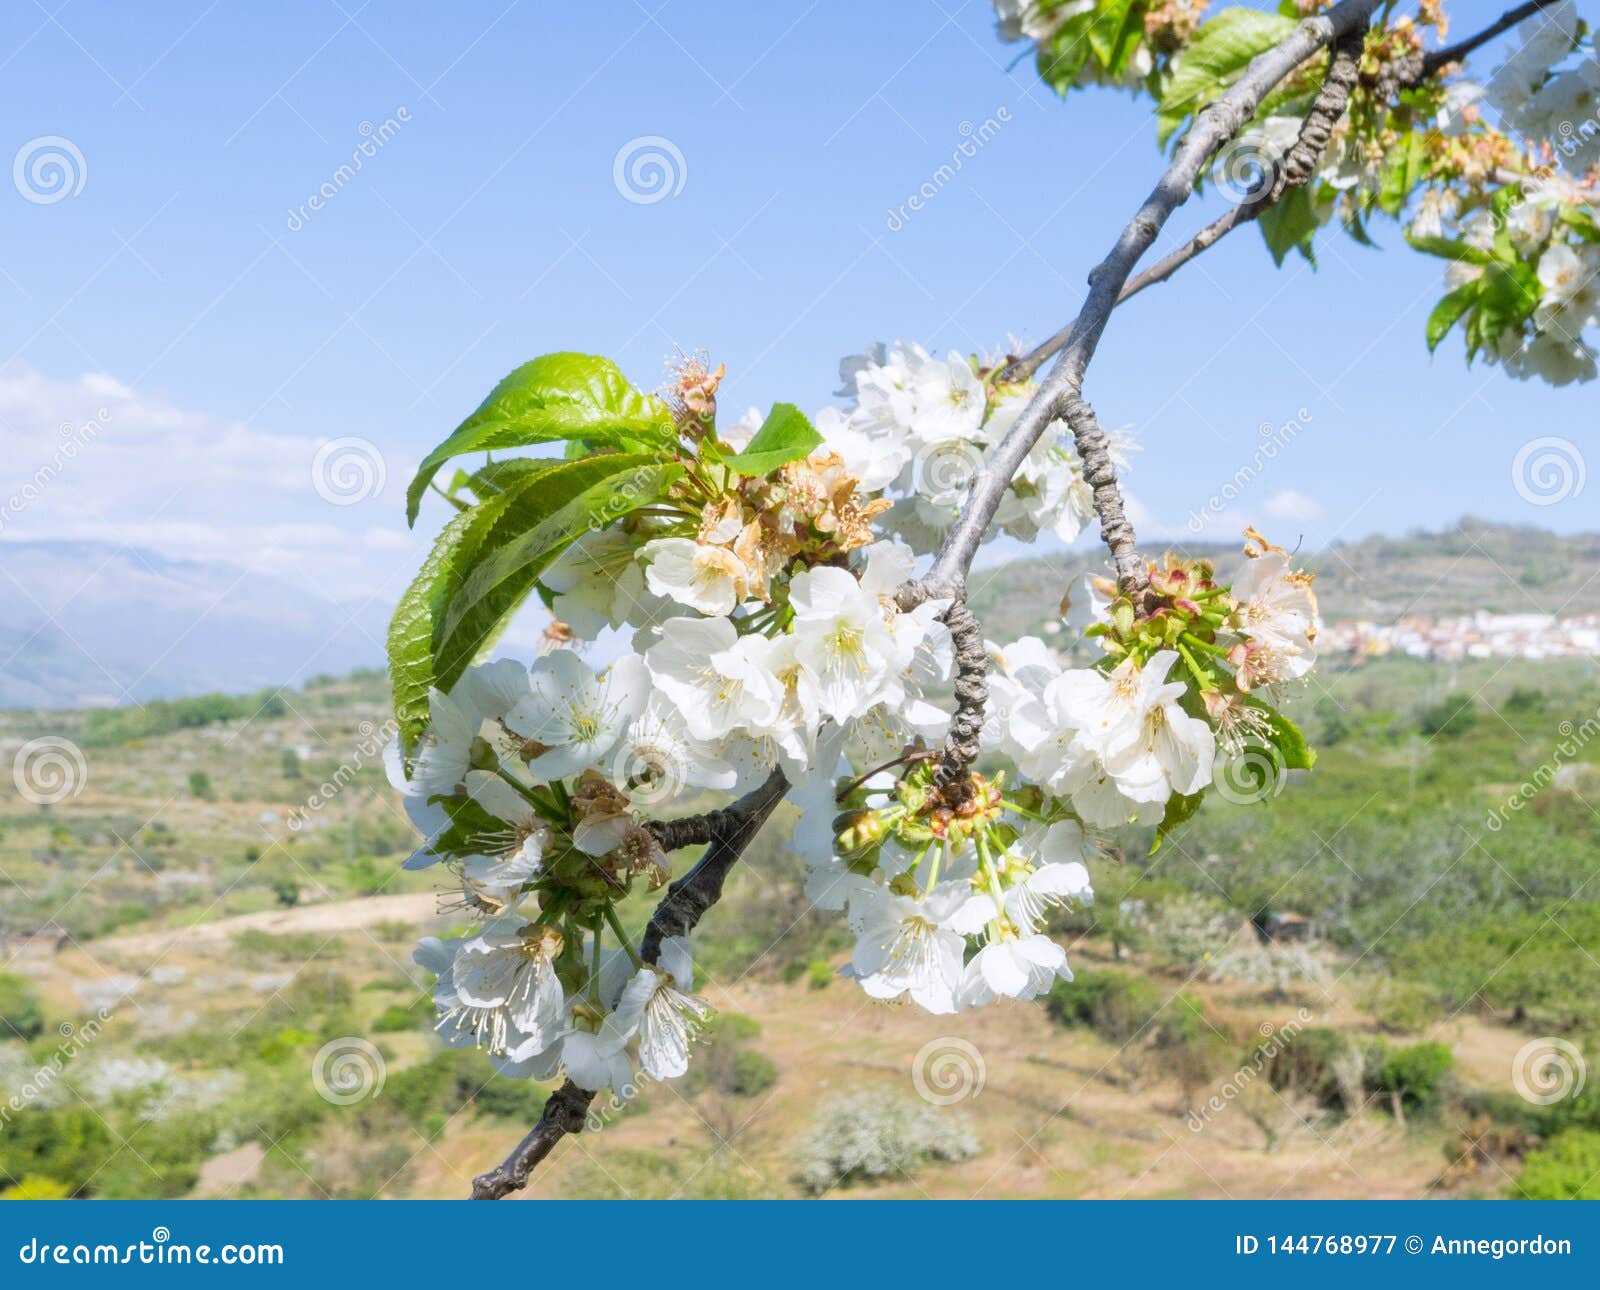 cherry blossoms, jerte valley